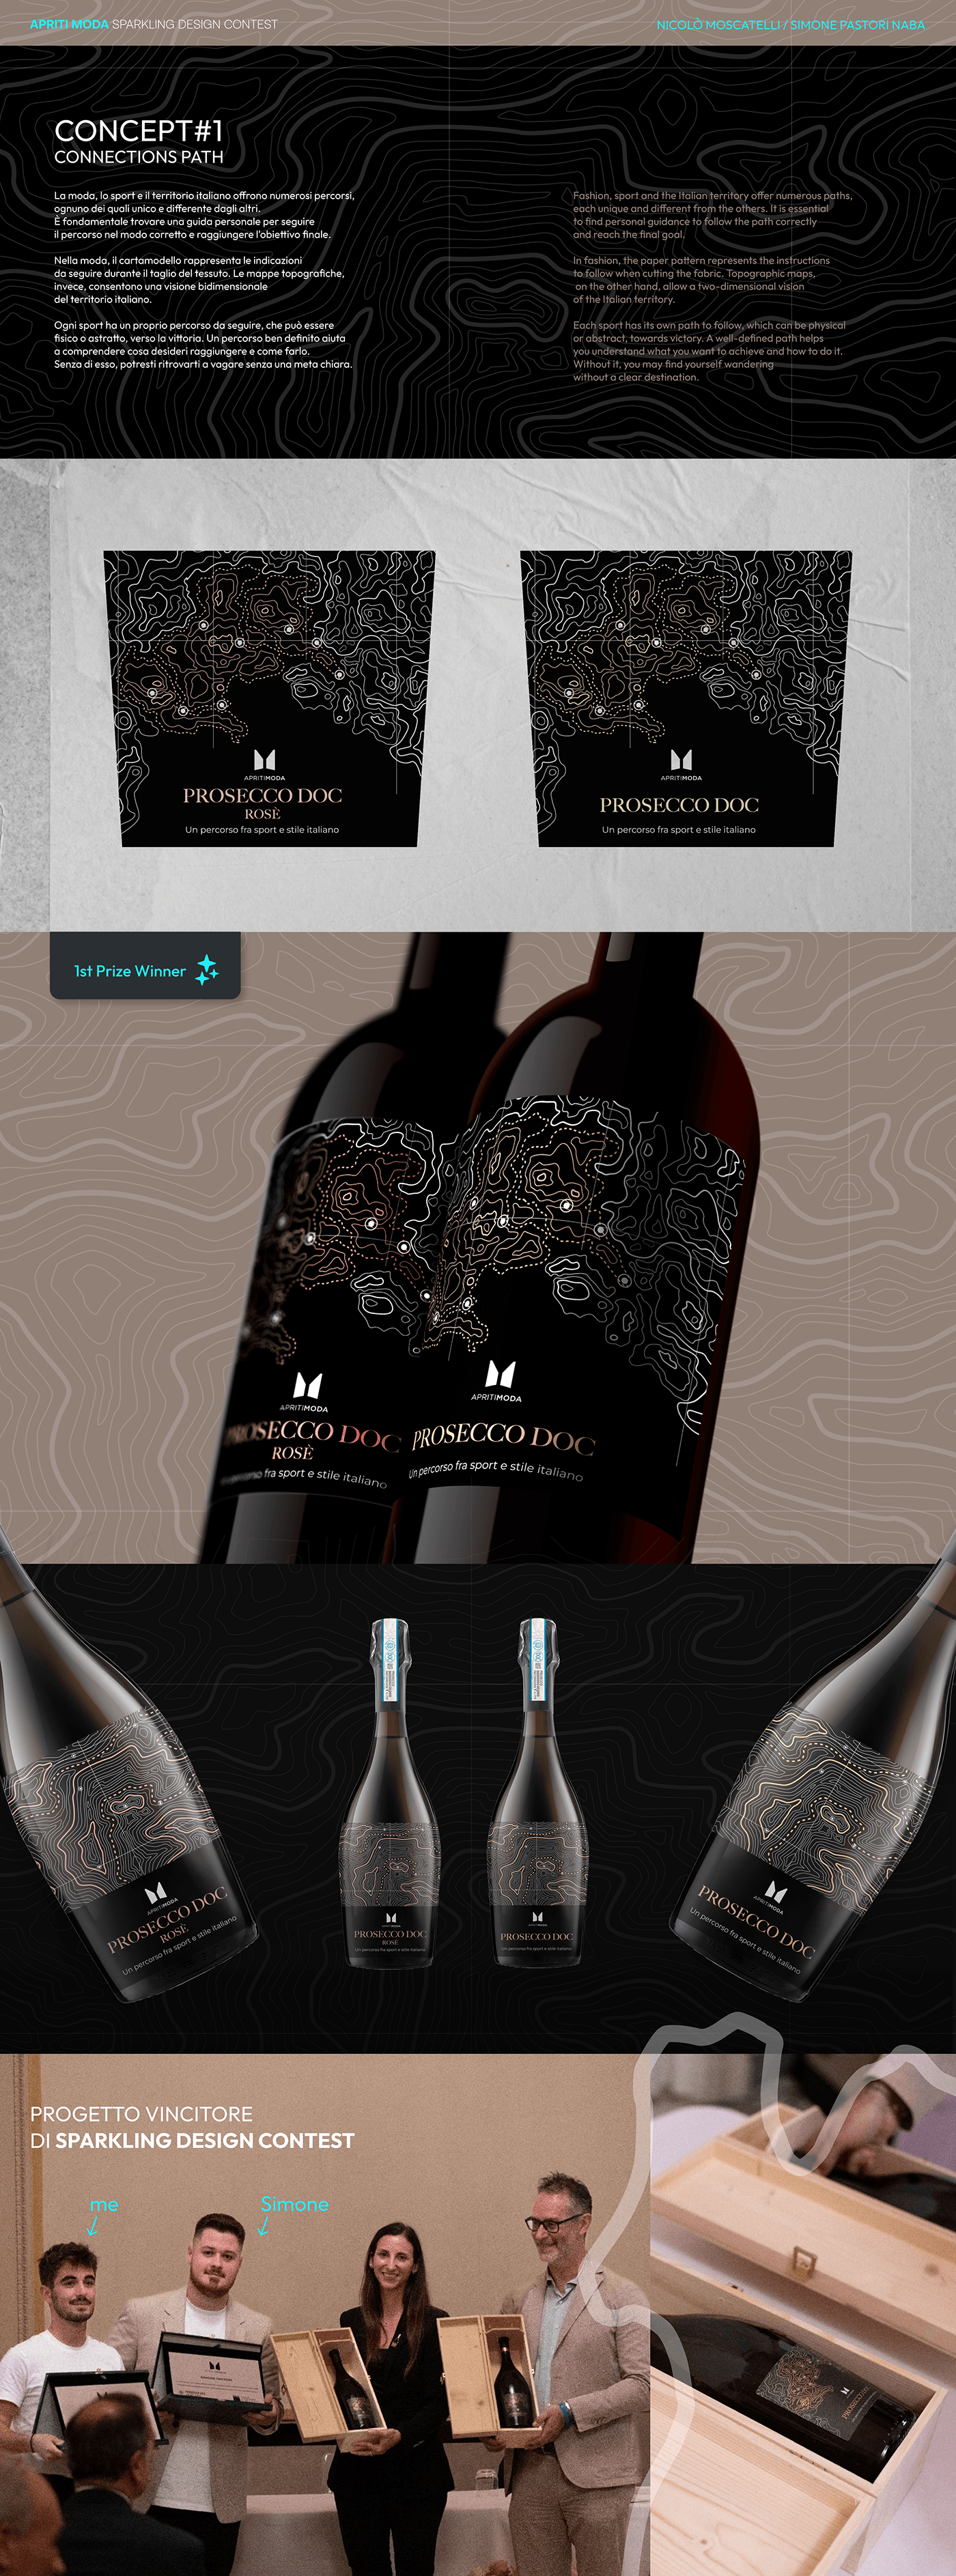 label design Packaging design brand identity adobe illustrator ILLUSTRATION  wine label Prosecco photoshop contest